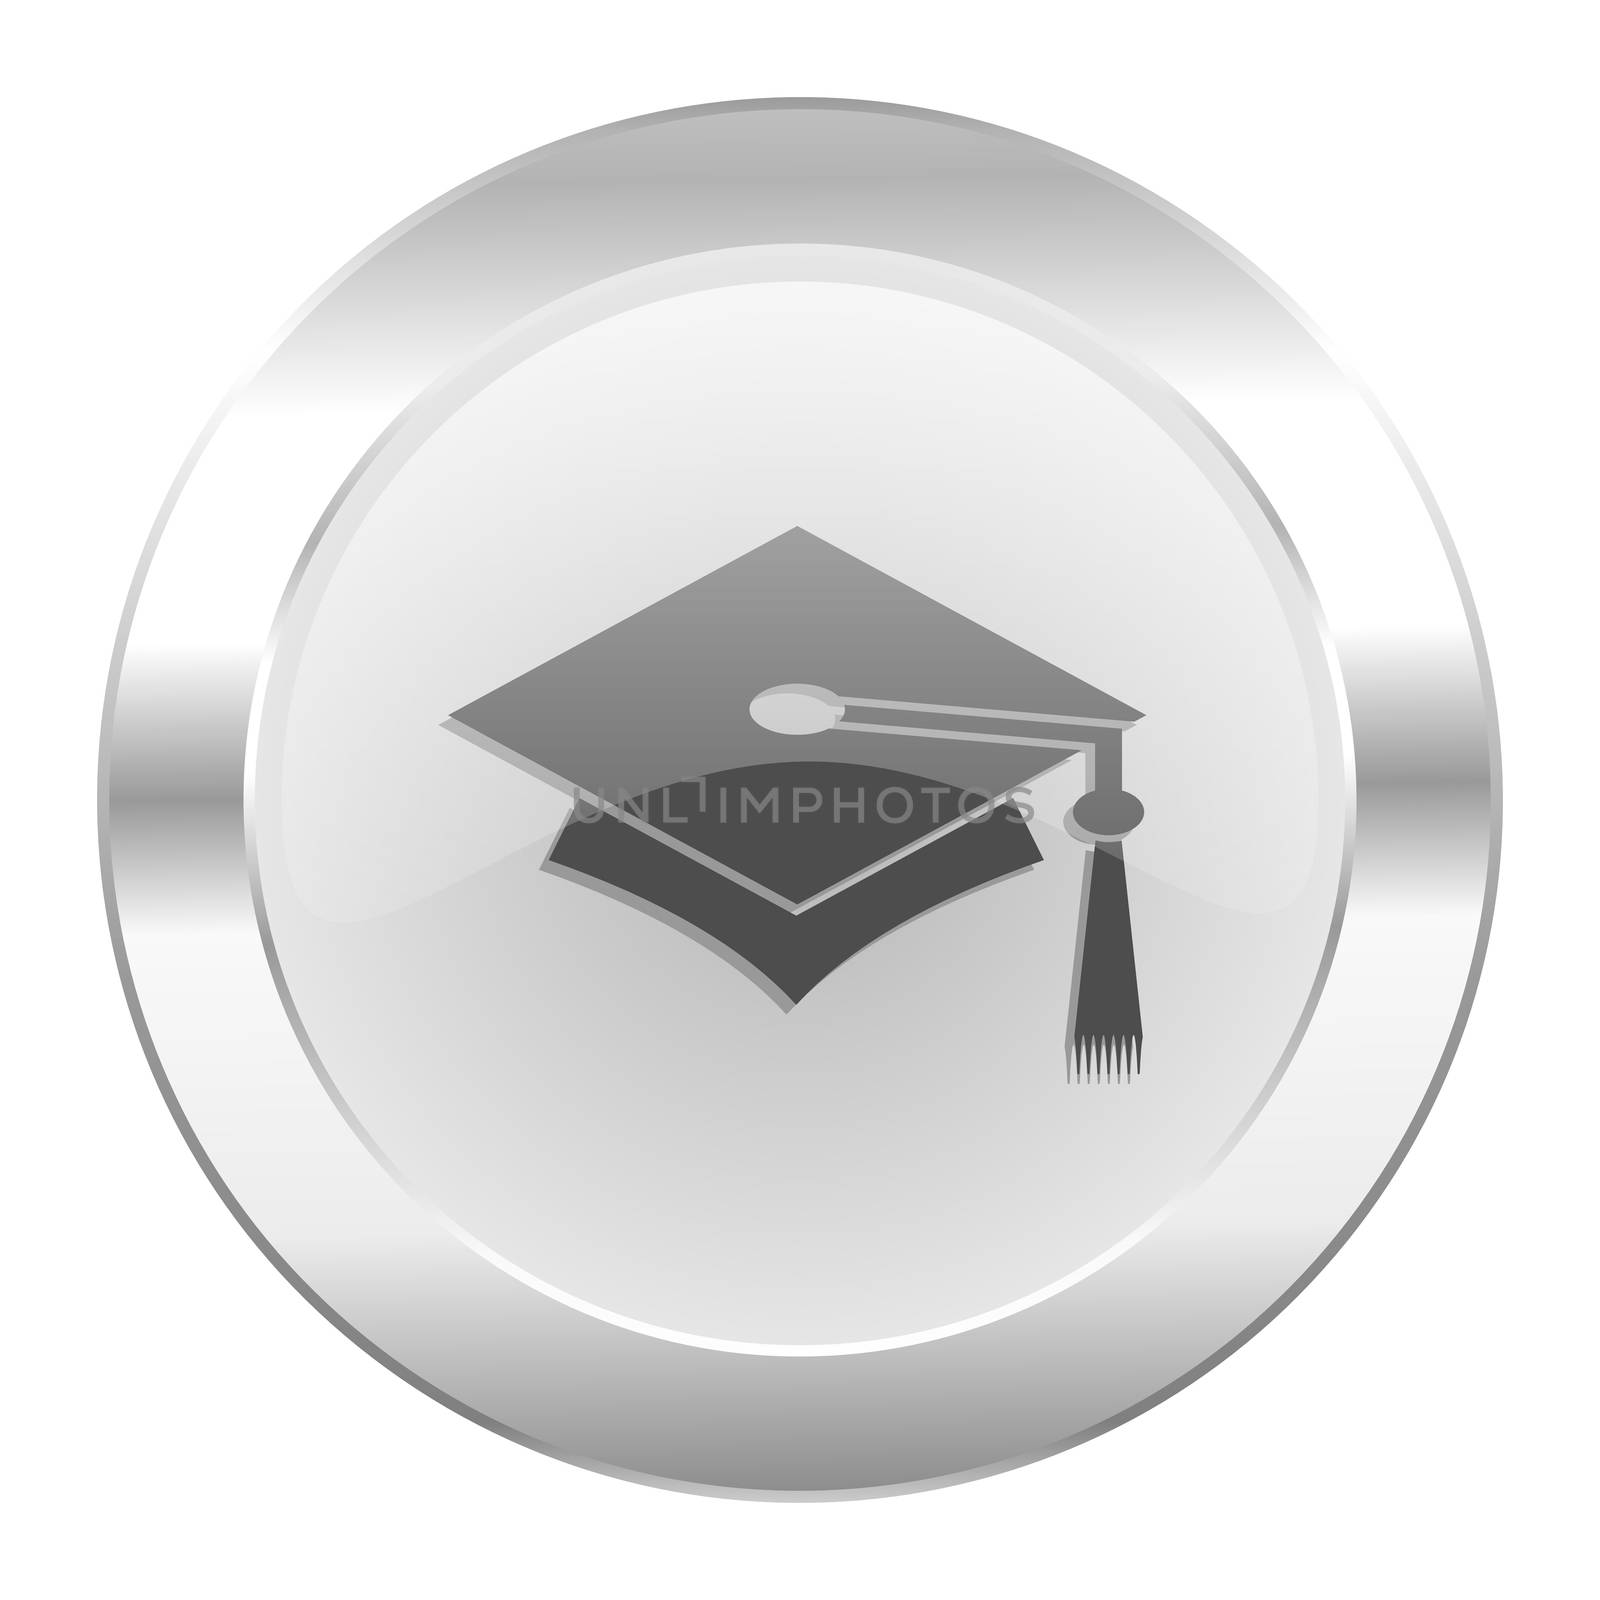 education chrome web icon isolated by alexwhite